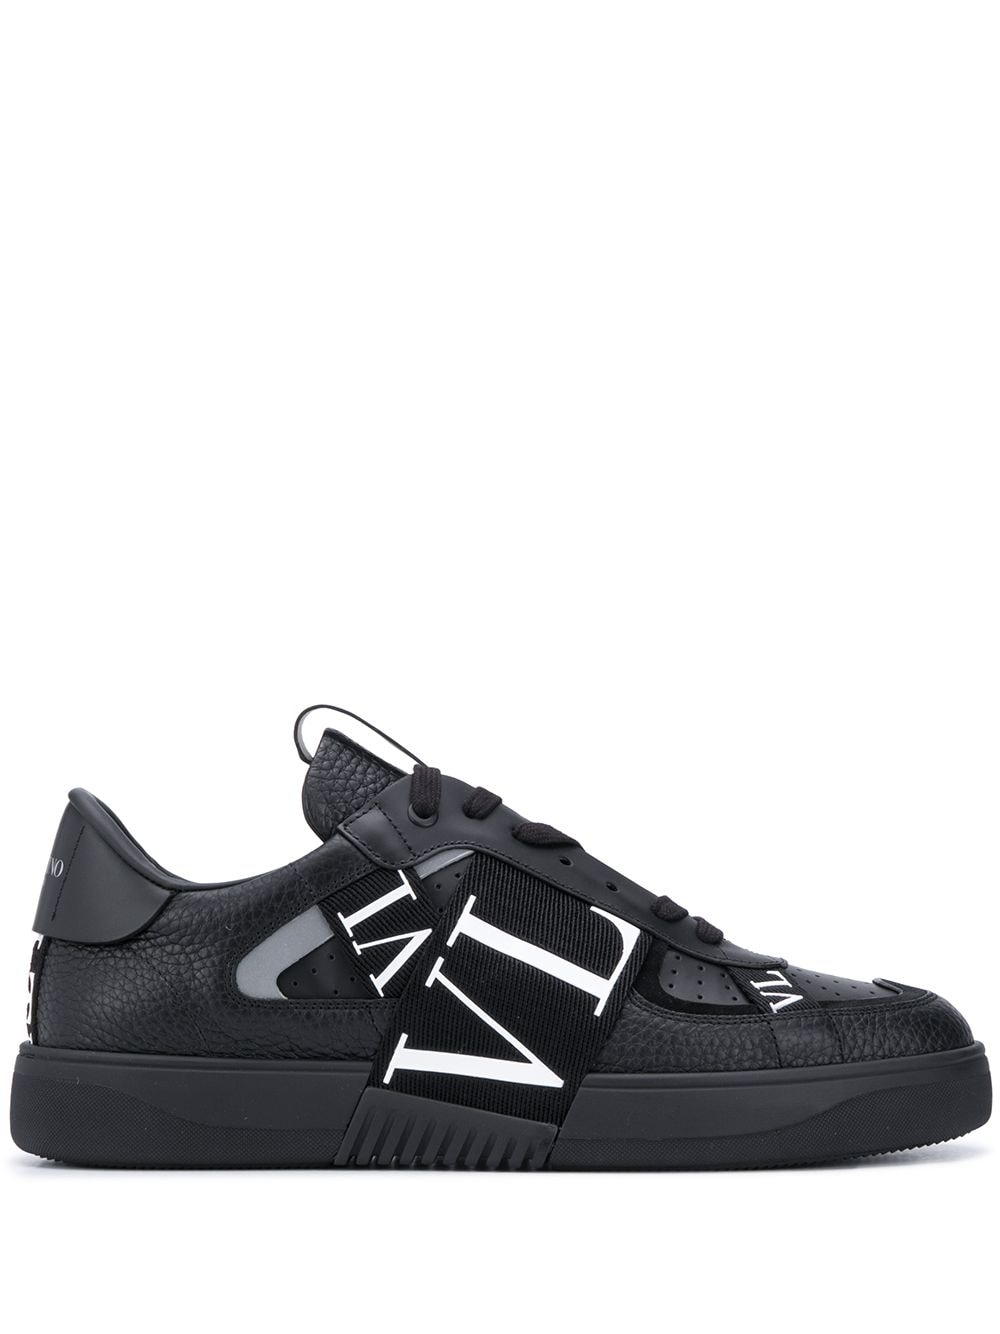 Vl7n Leather Sneakers мъжки обувки Valentino Garavani 837980957_39